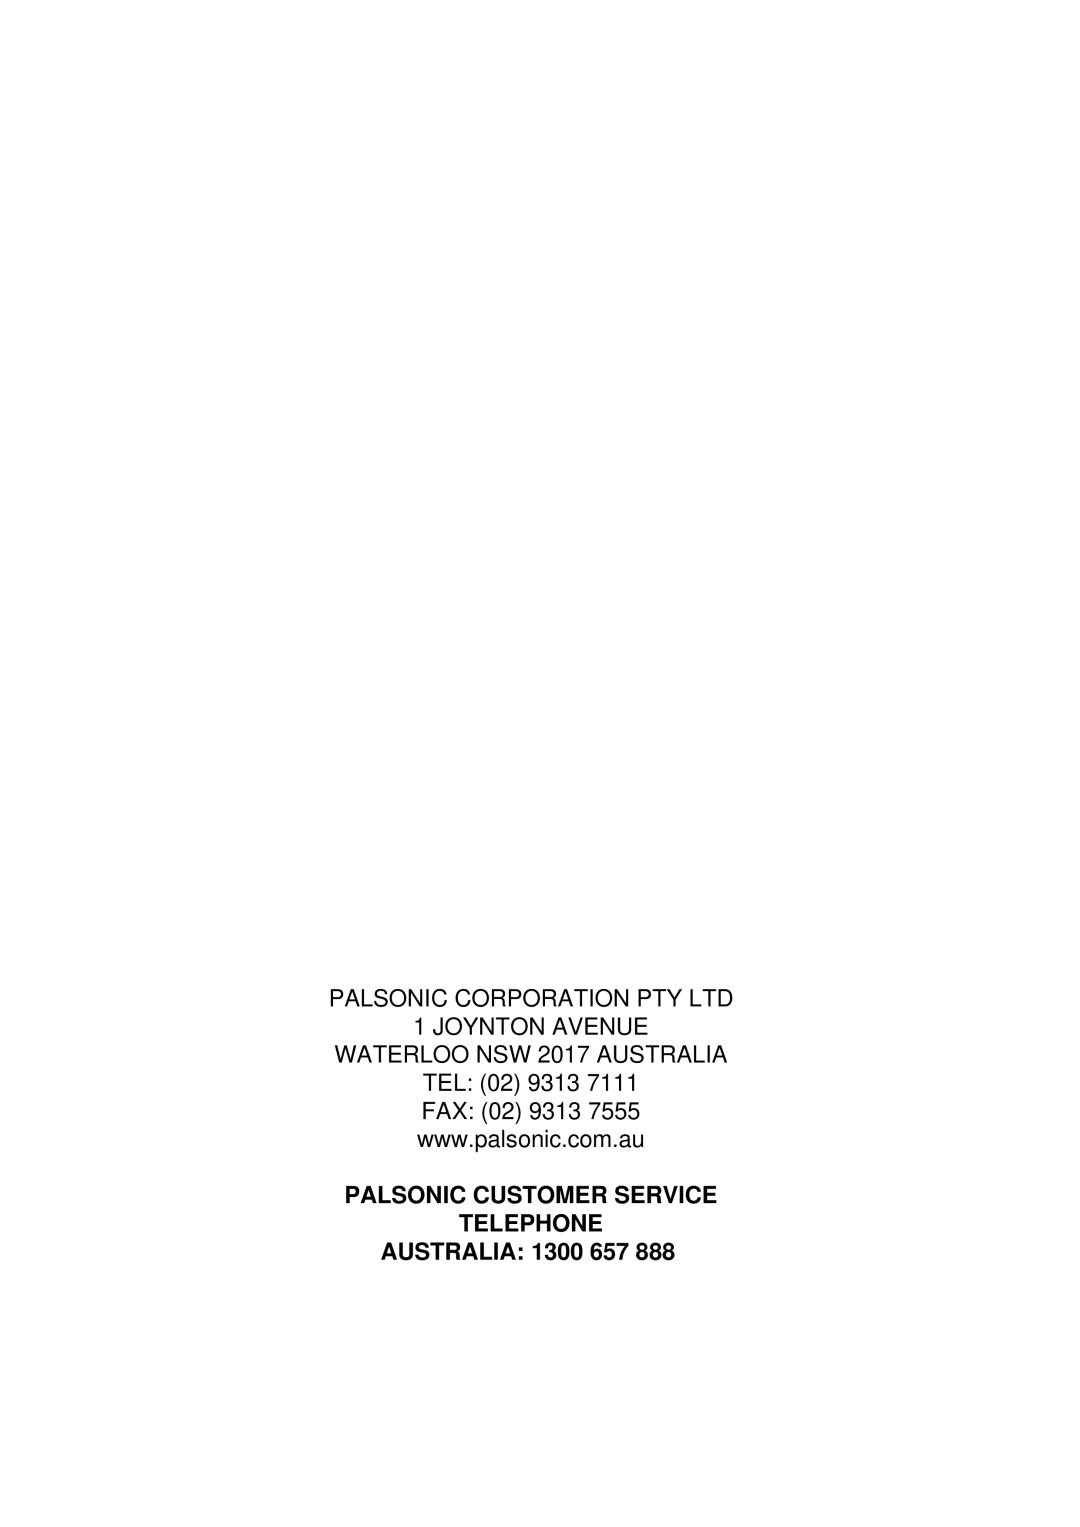 Palsonic PMC-191 instruction manual WATERLOO NSW 2017 AUSTRALIA TEL, Palsonic Customer Service Telephone, Australia 